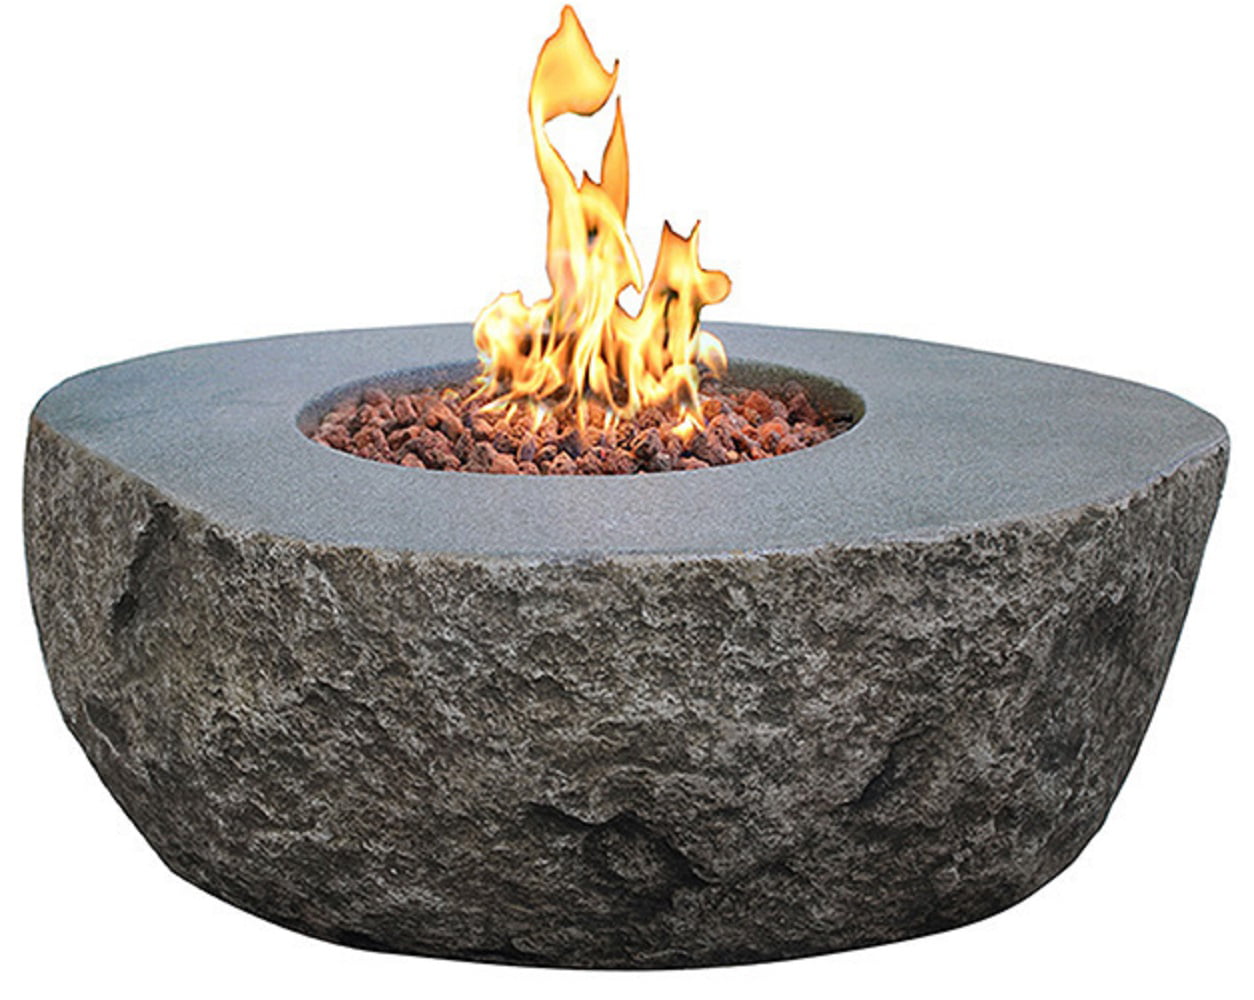 Elementi Outdoor Boulder Fire Pit Table, Lava Rock Fire Pit Table